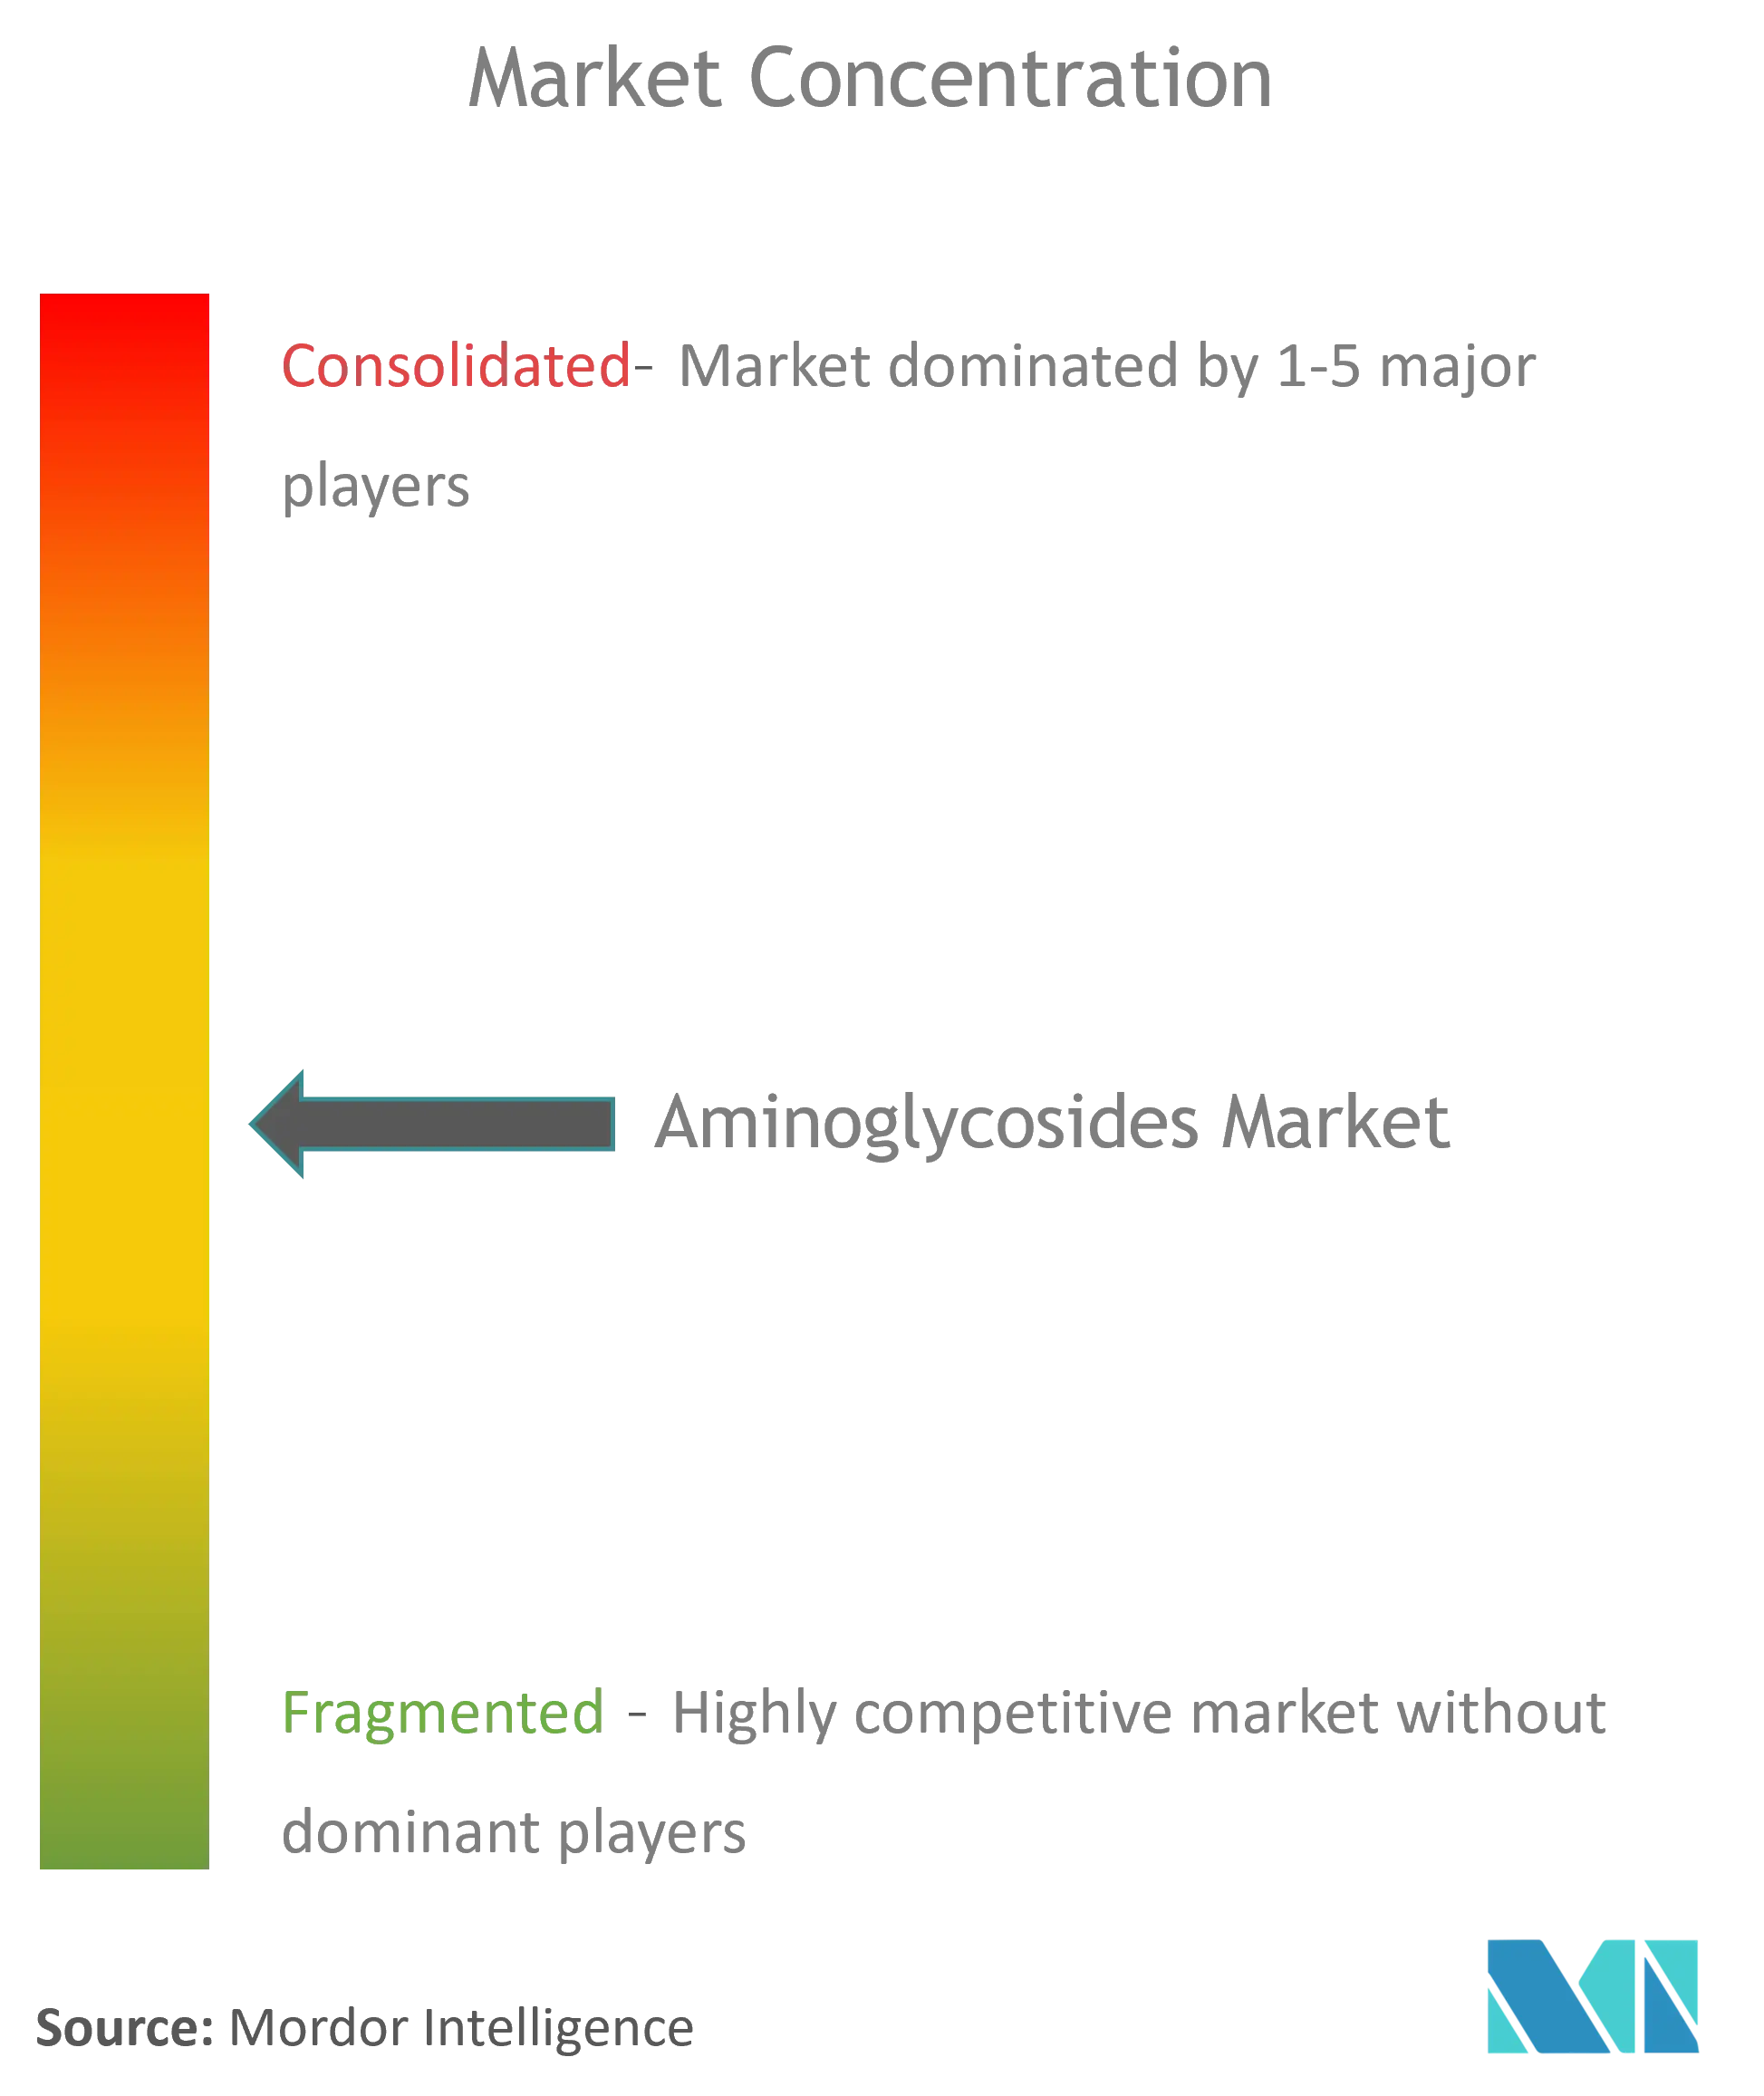 Global Aminoglycosides Market Concentration